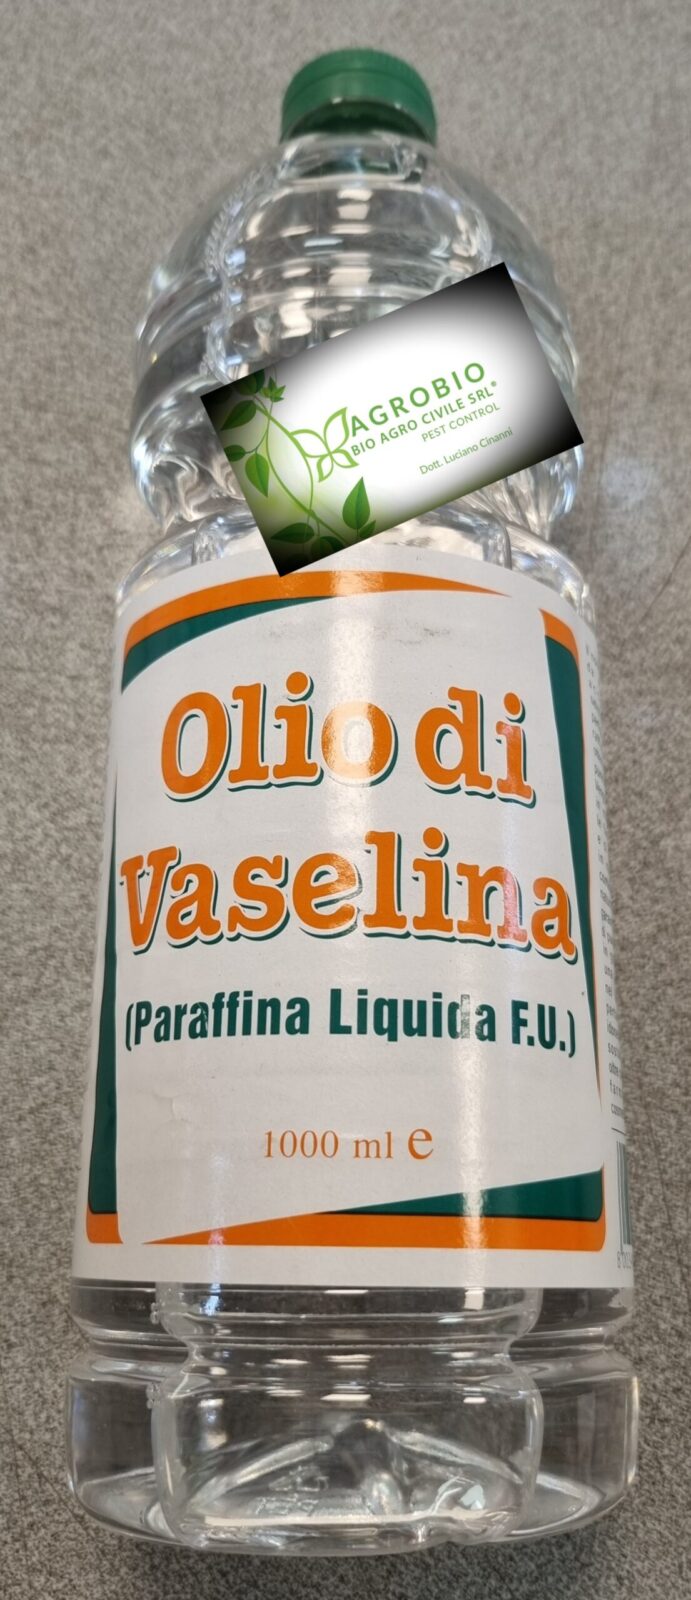 Olio di vaselina FU paraffina liquida - uso enologico